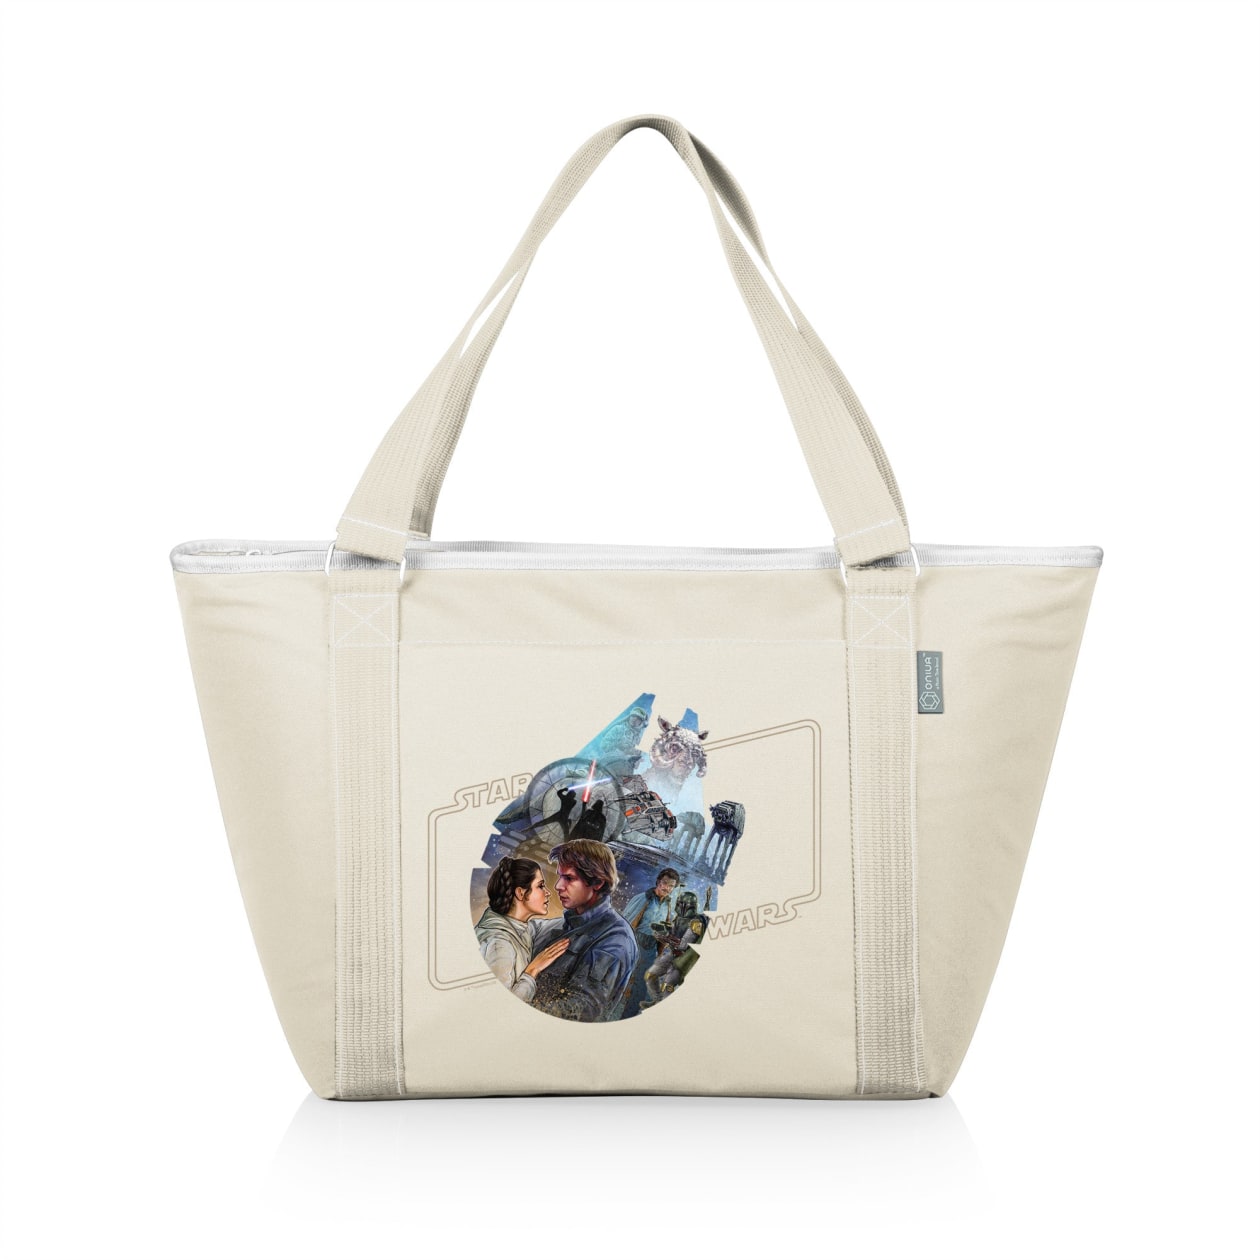 Star Wars Celebration - Topanga Cooler Tote Bag - Color: Sand